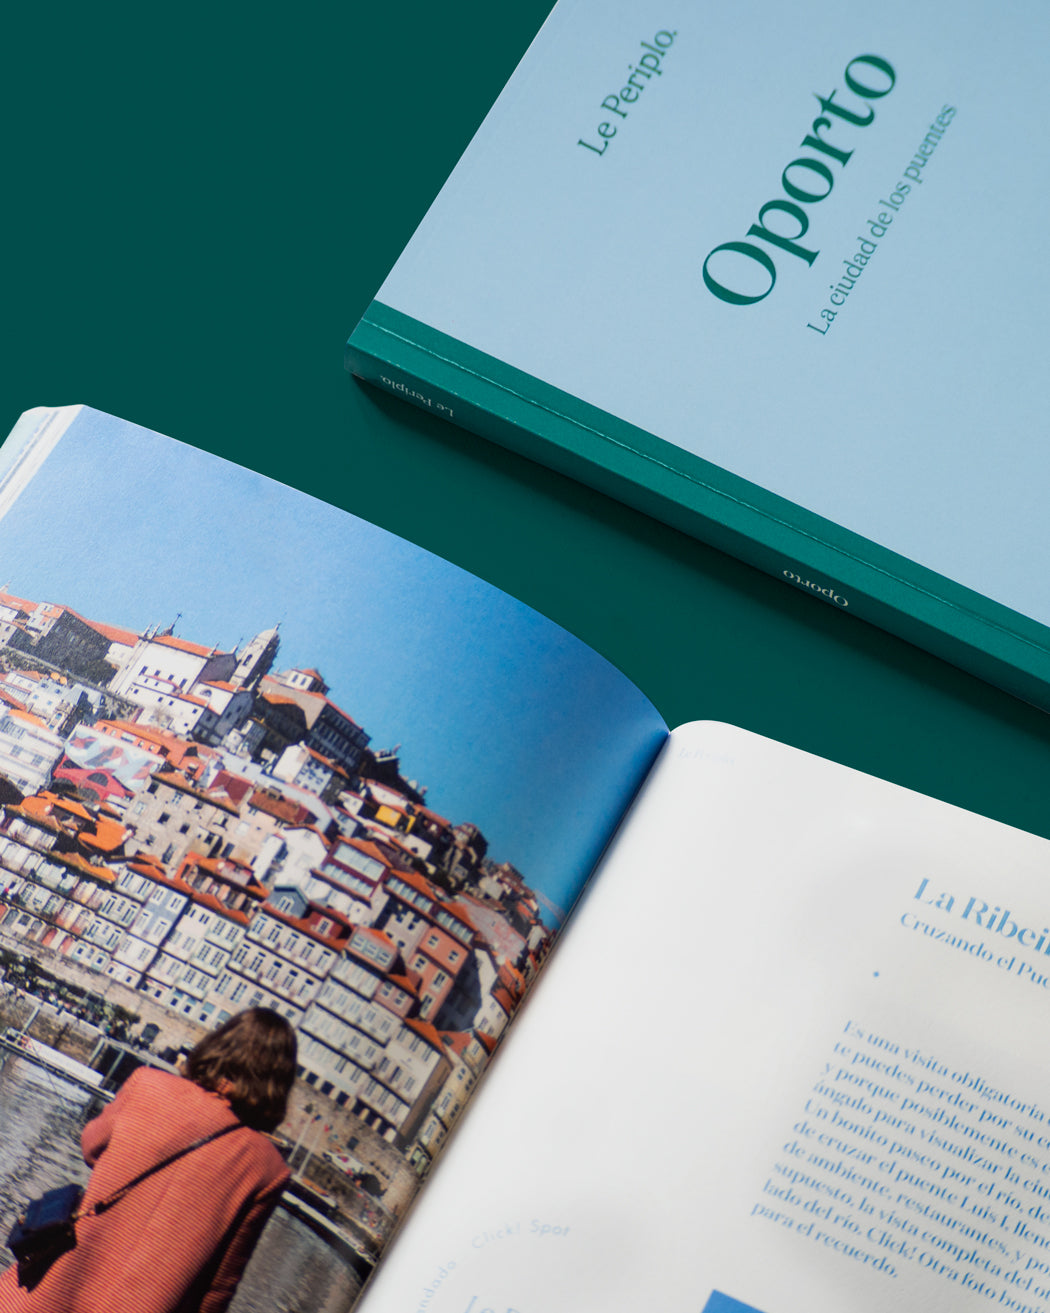 Porto New Edition (printed) Spanish version